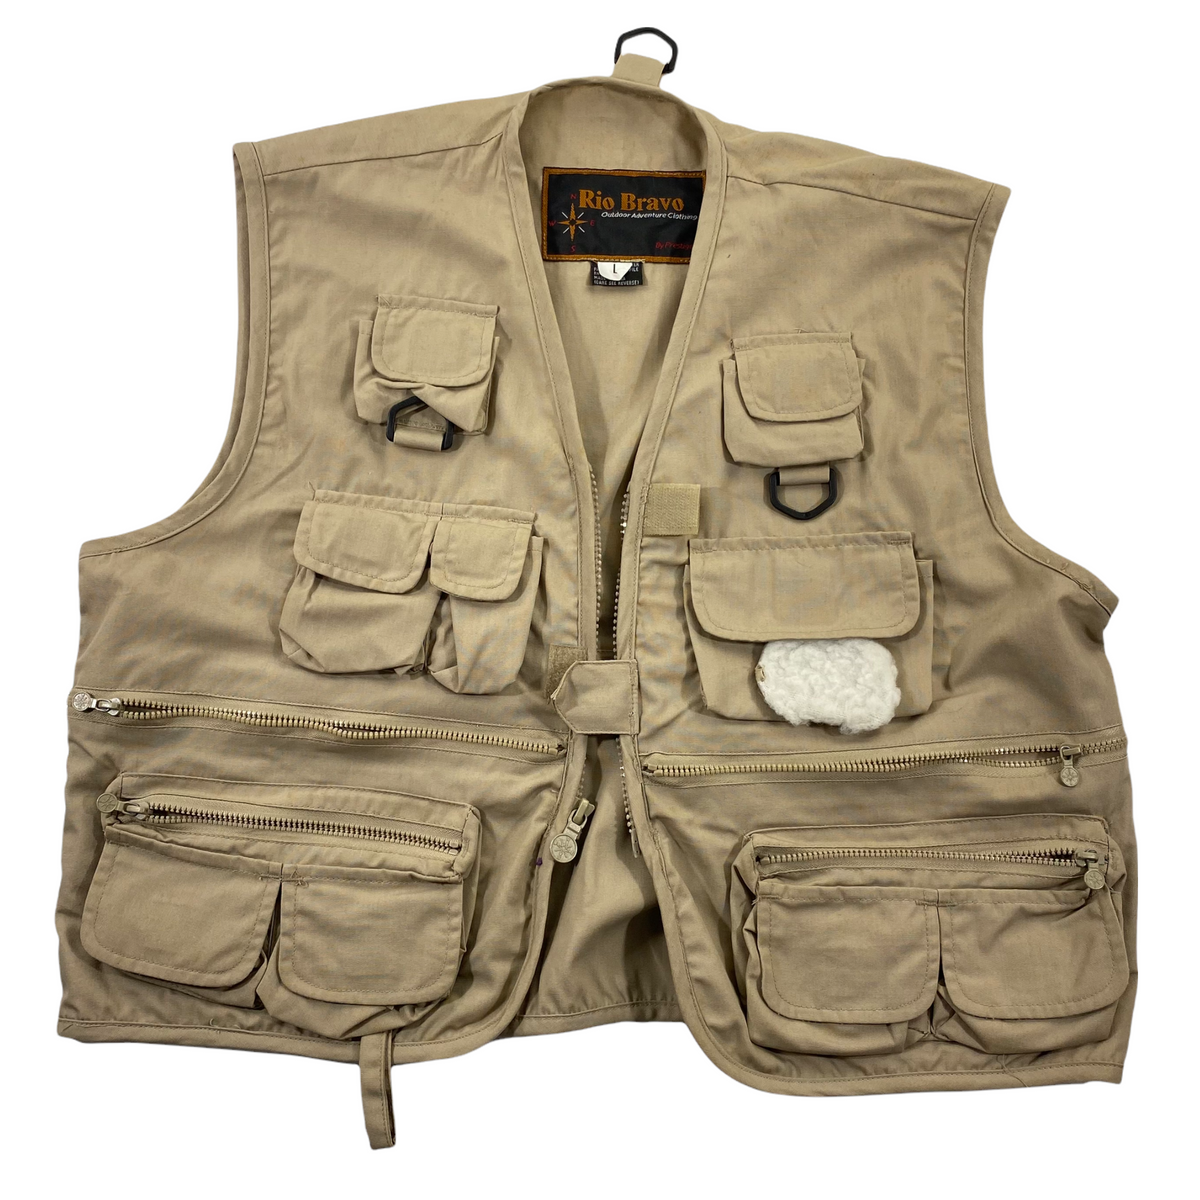 Vintage Fishing Vest (1998) - Size M